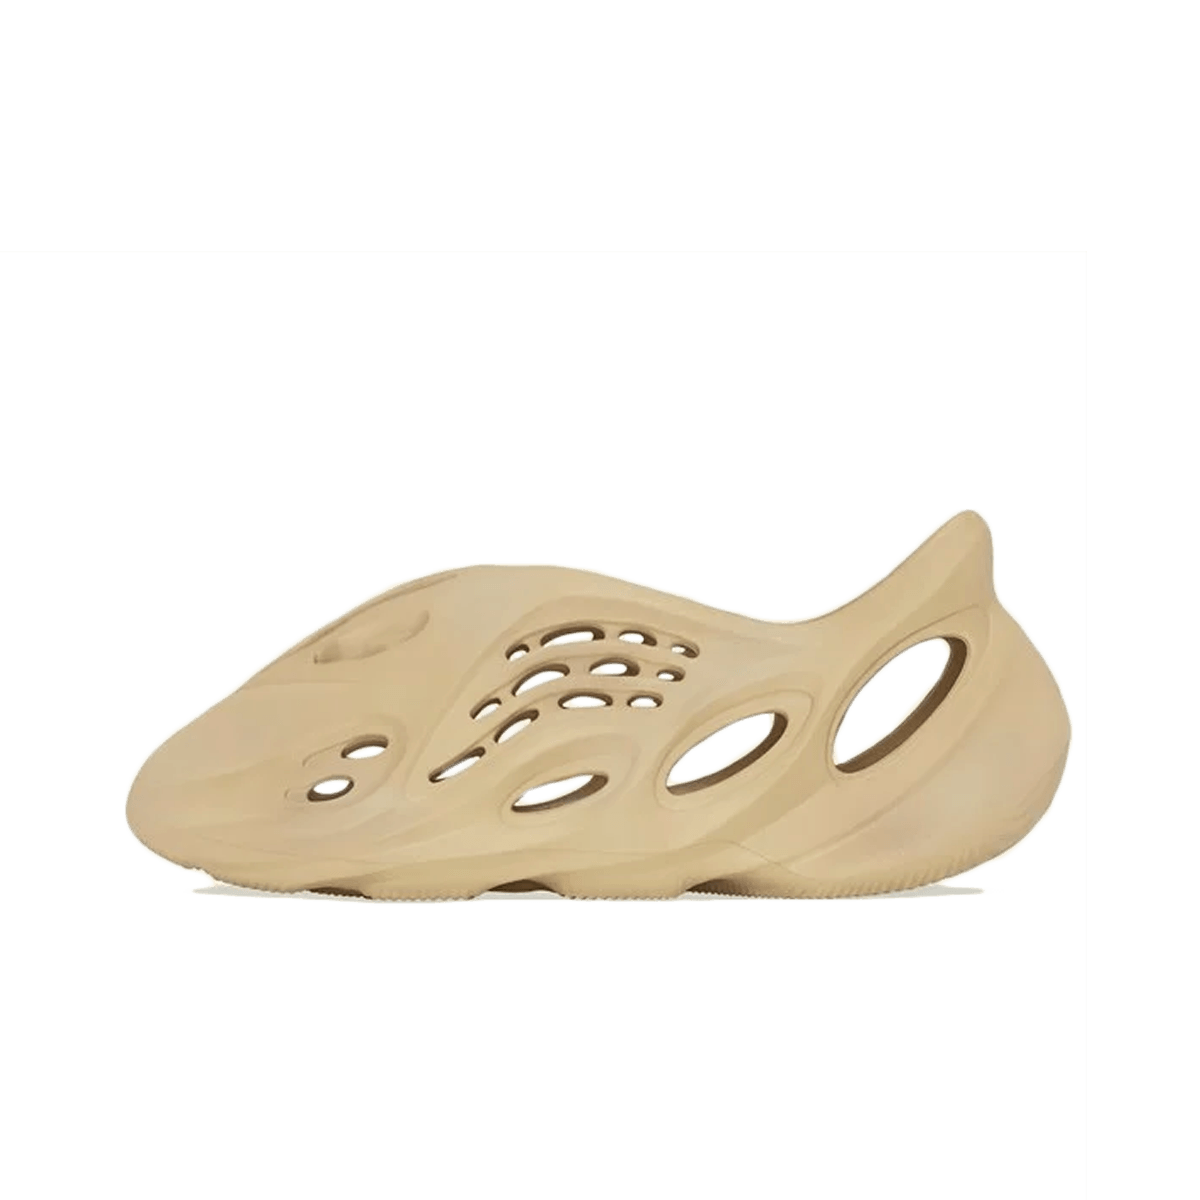 adidas Originals Yeezy Foam Runner 'Desert Sand'